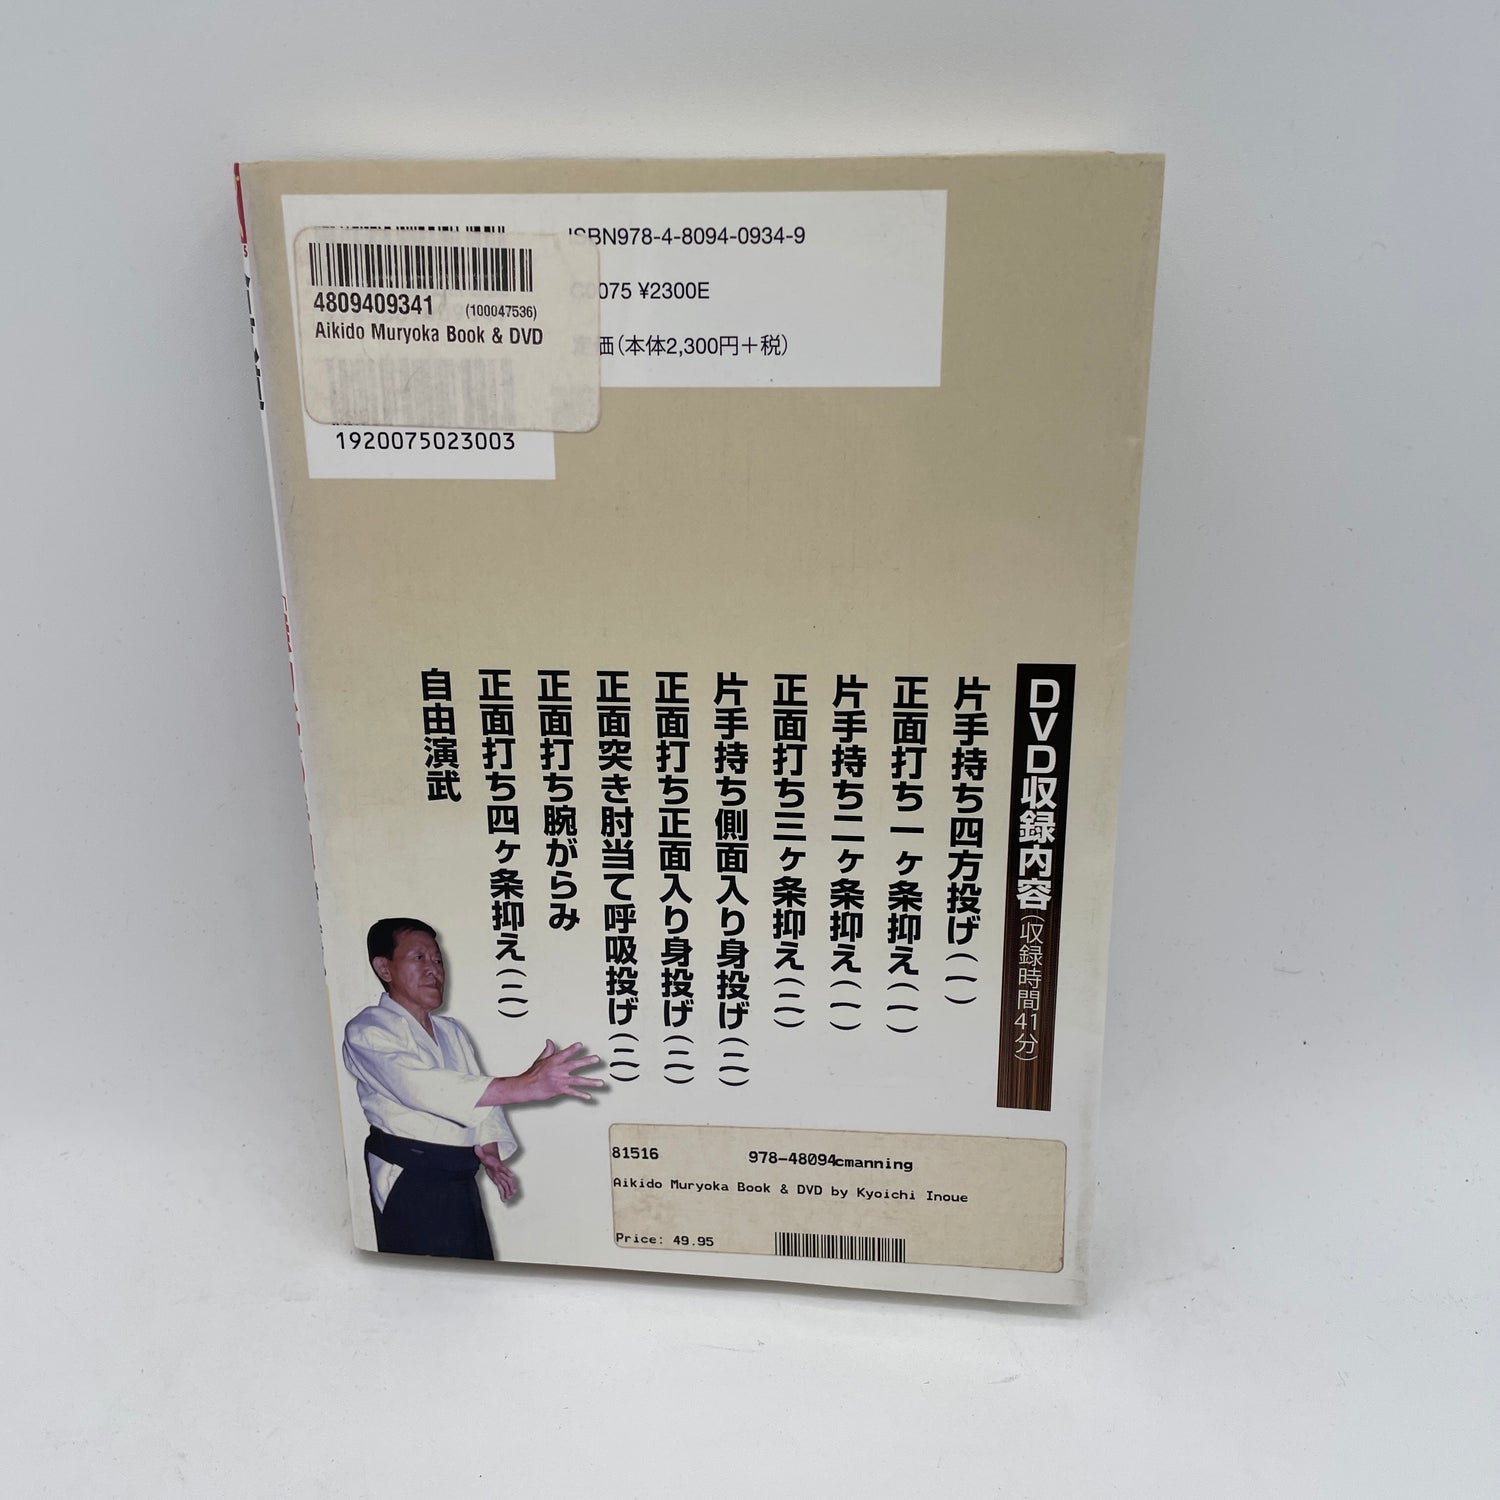 Libro y DVD de Aikido Muryoka de Kyoichi Inoue